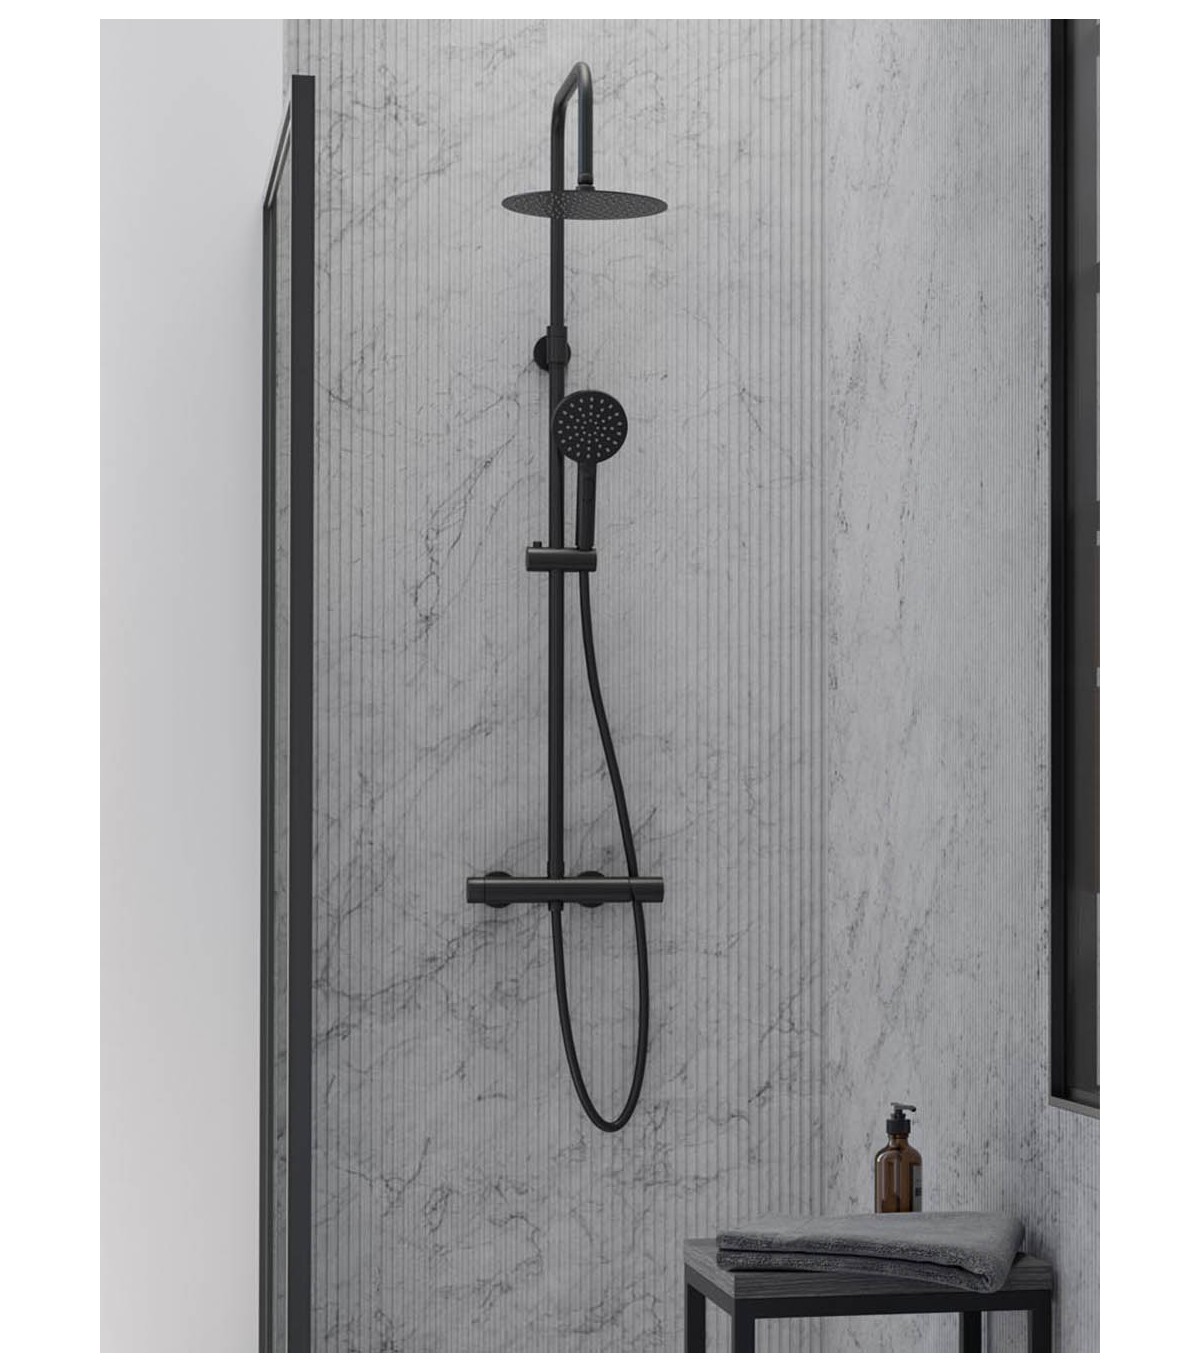 Mampara de ducha frontal 3 puertas correderas (serie Júcar modelo Hermes)